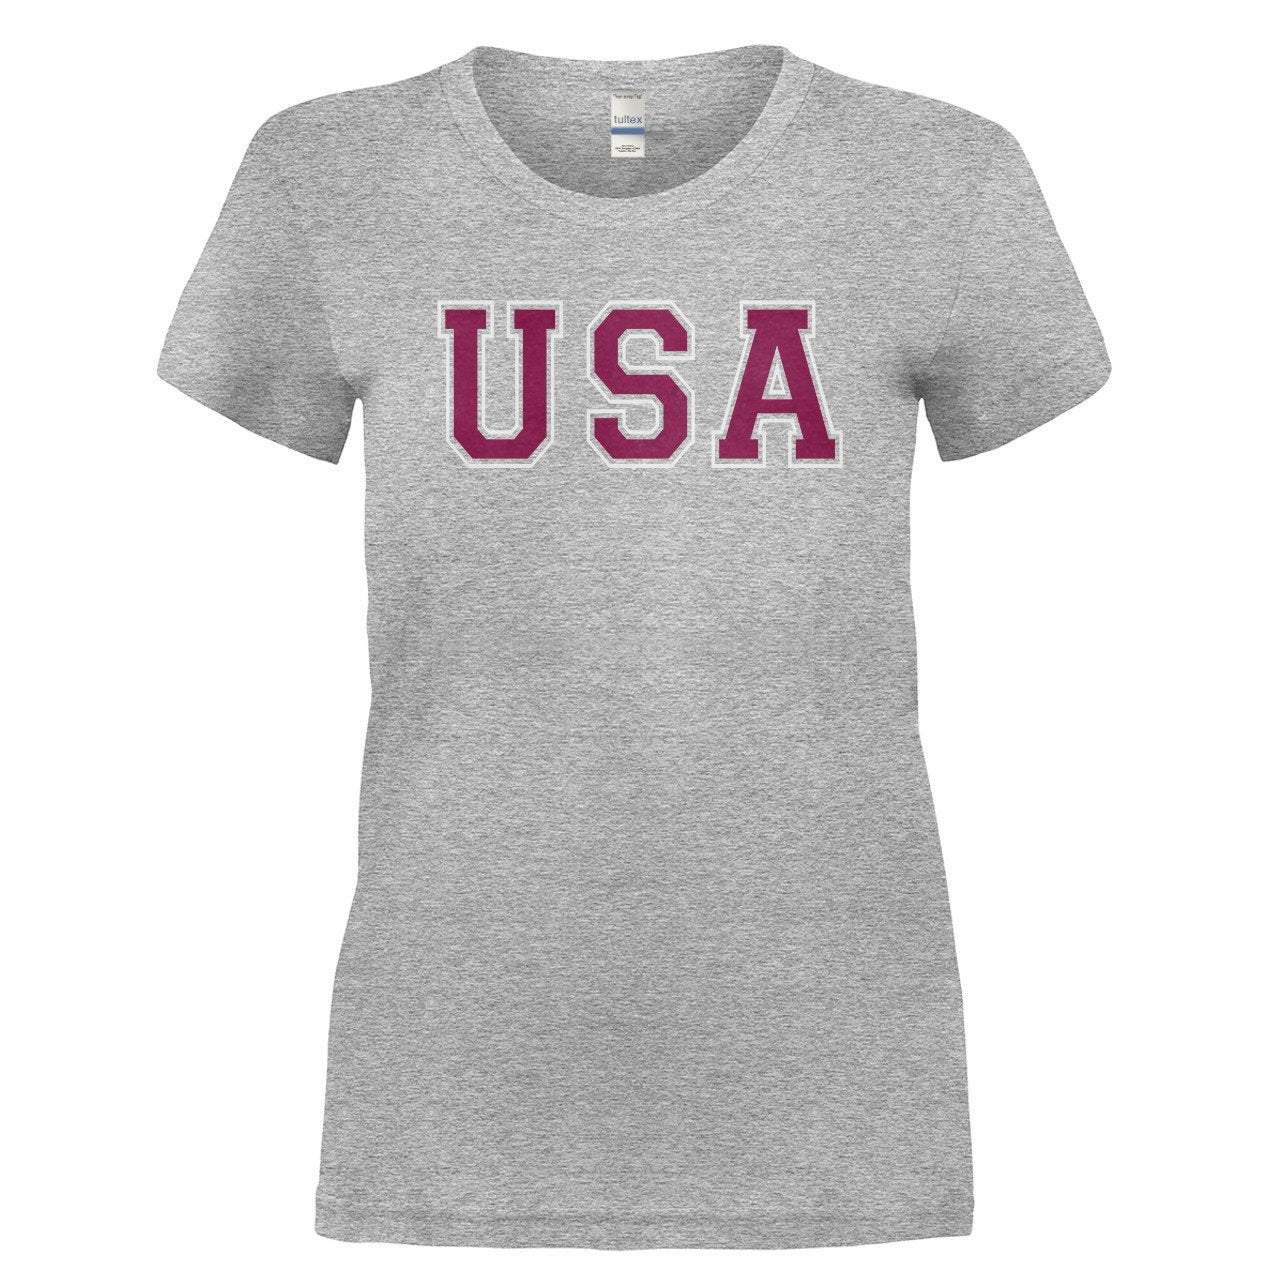 USA - America T-Shirts & Hoodies | I Love Apparel